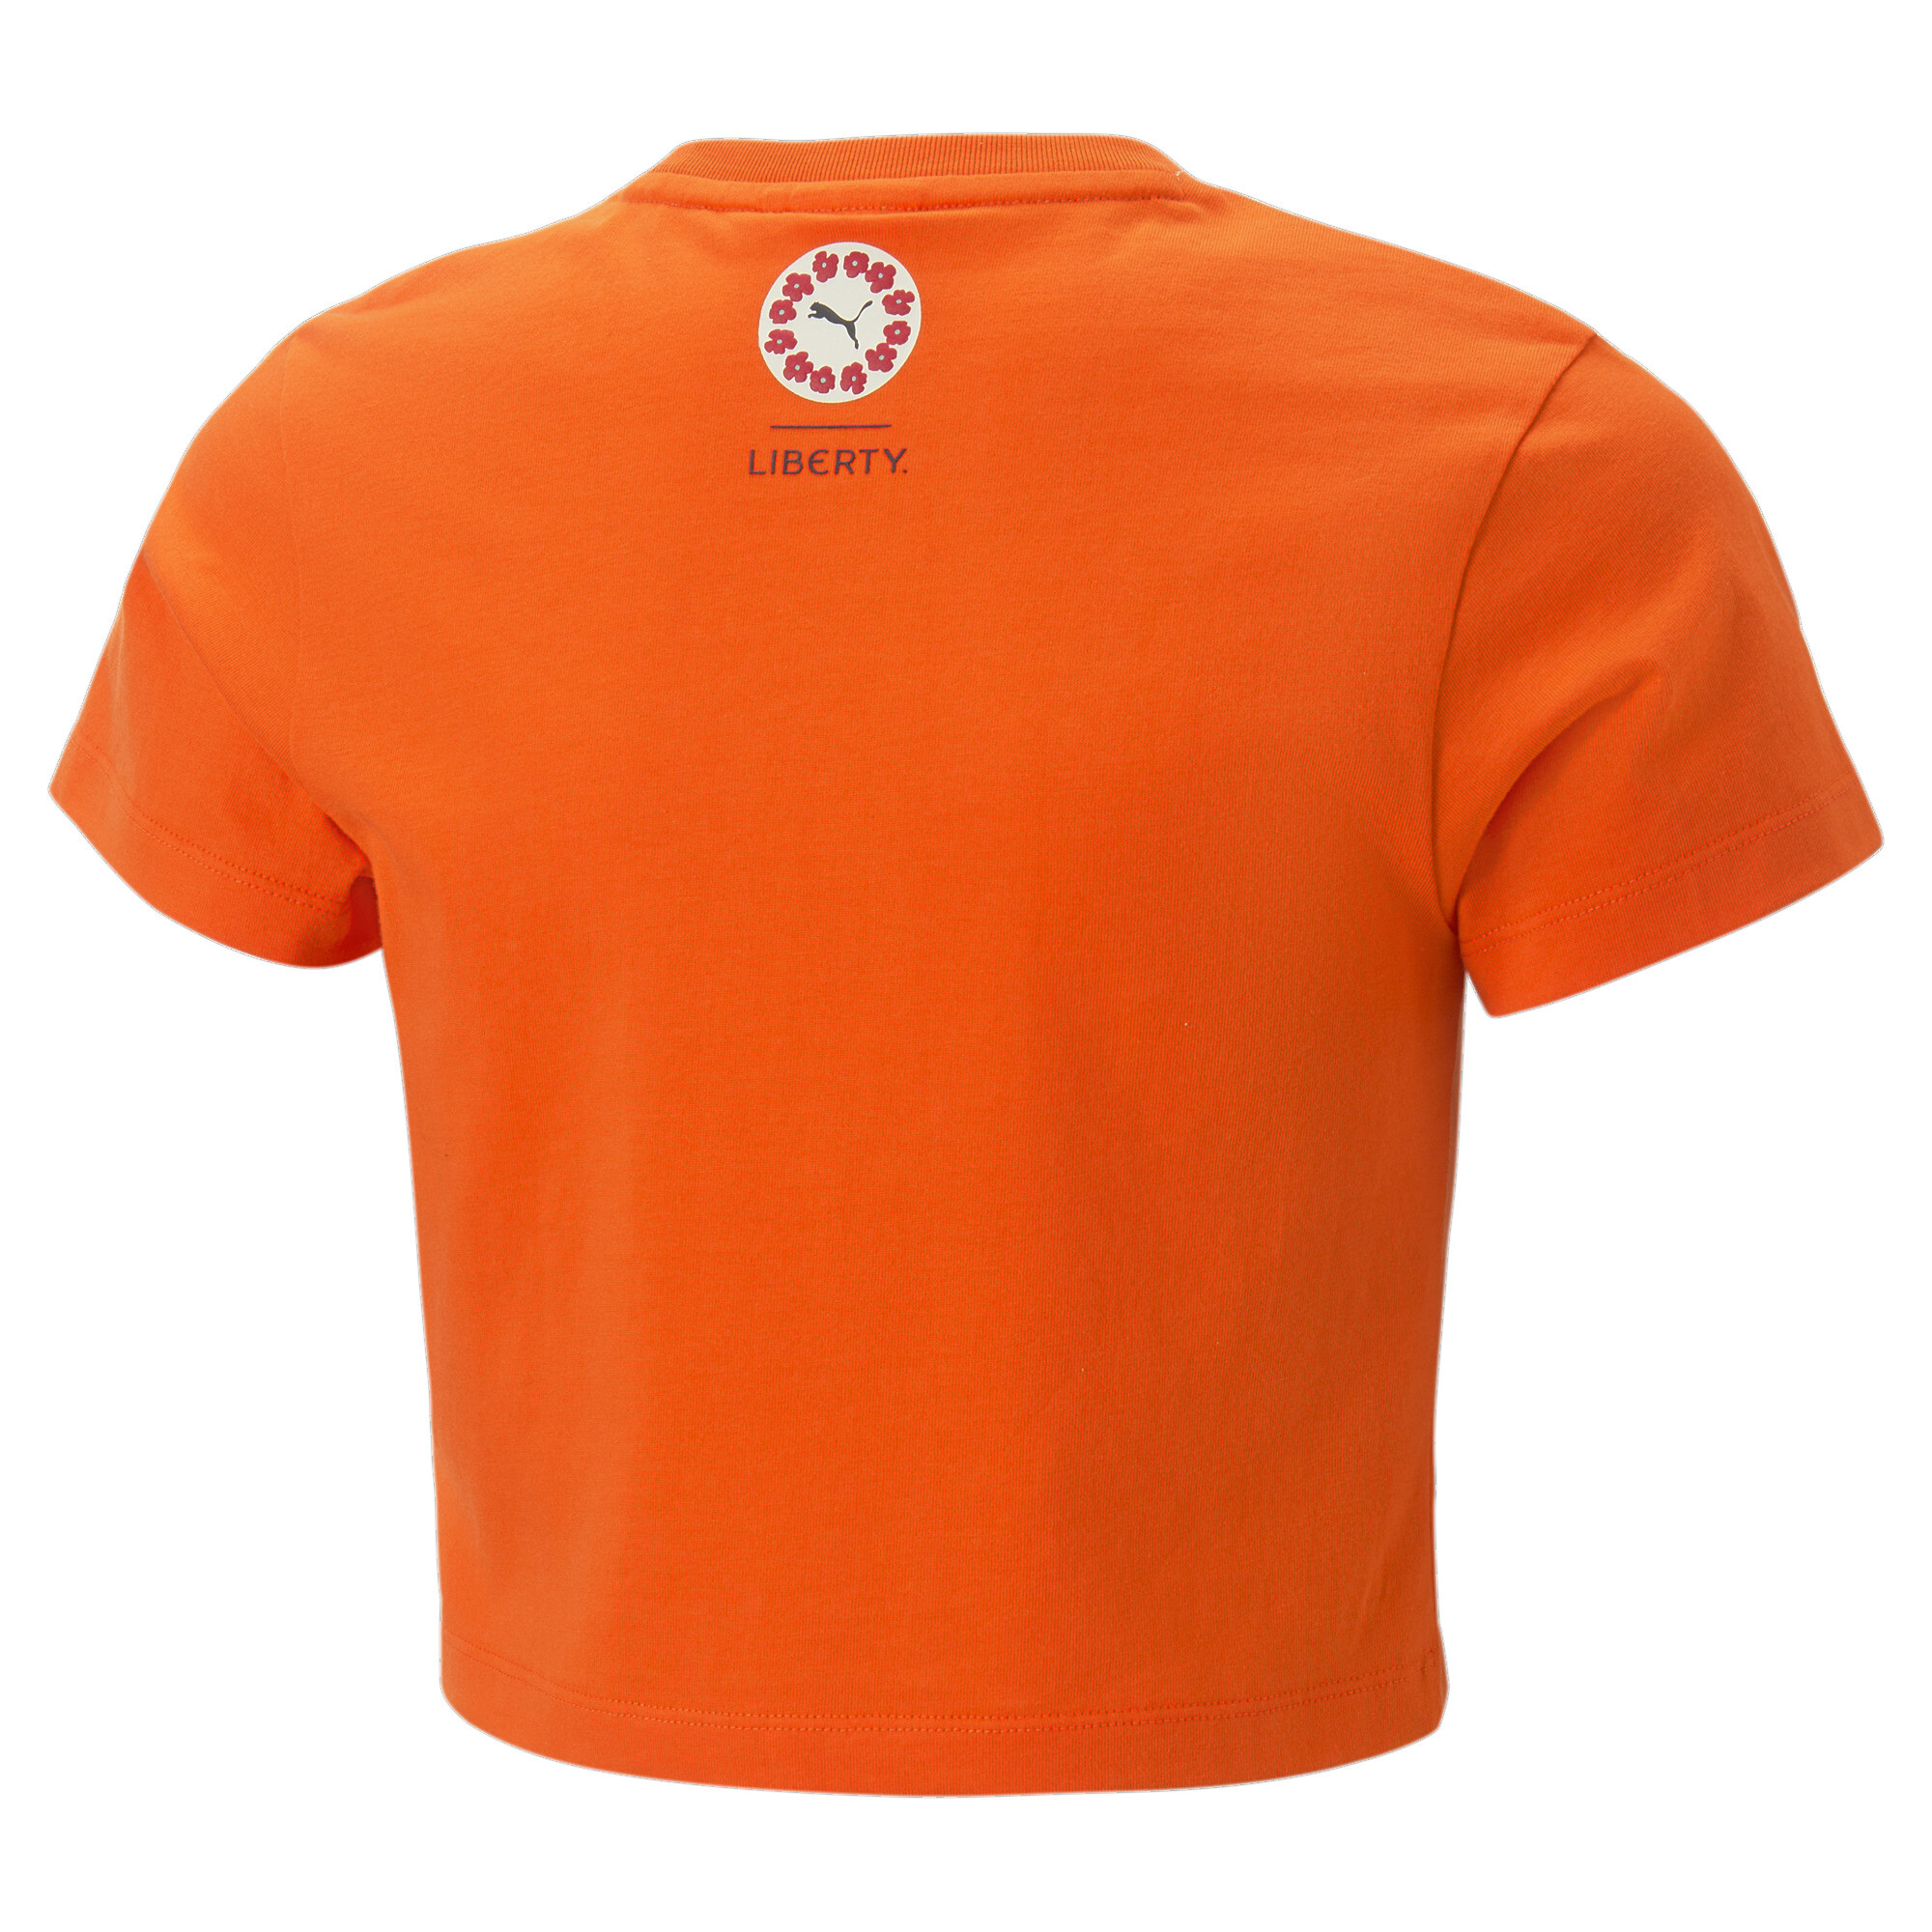 PUMA X LIBERTY T-Shirt Kids In Orange, Size 4-5 Youth